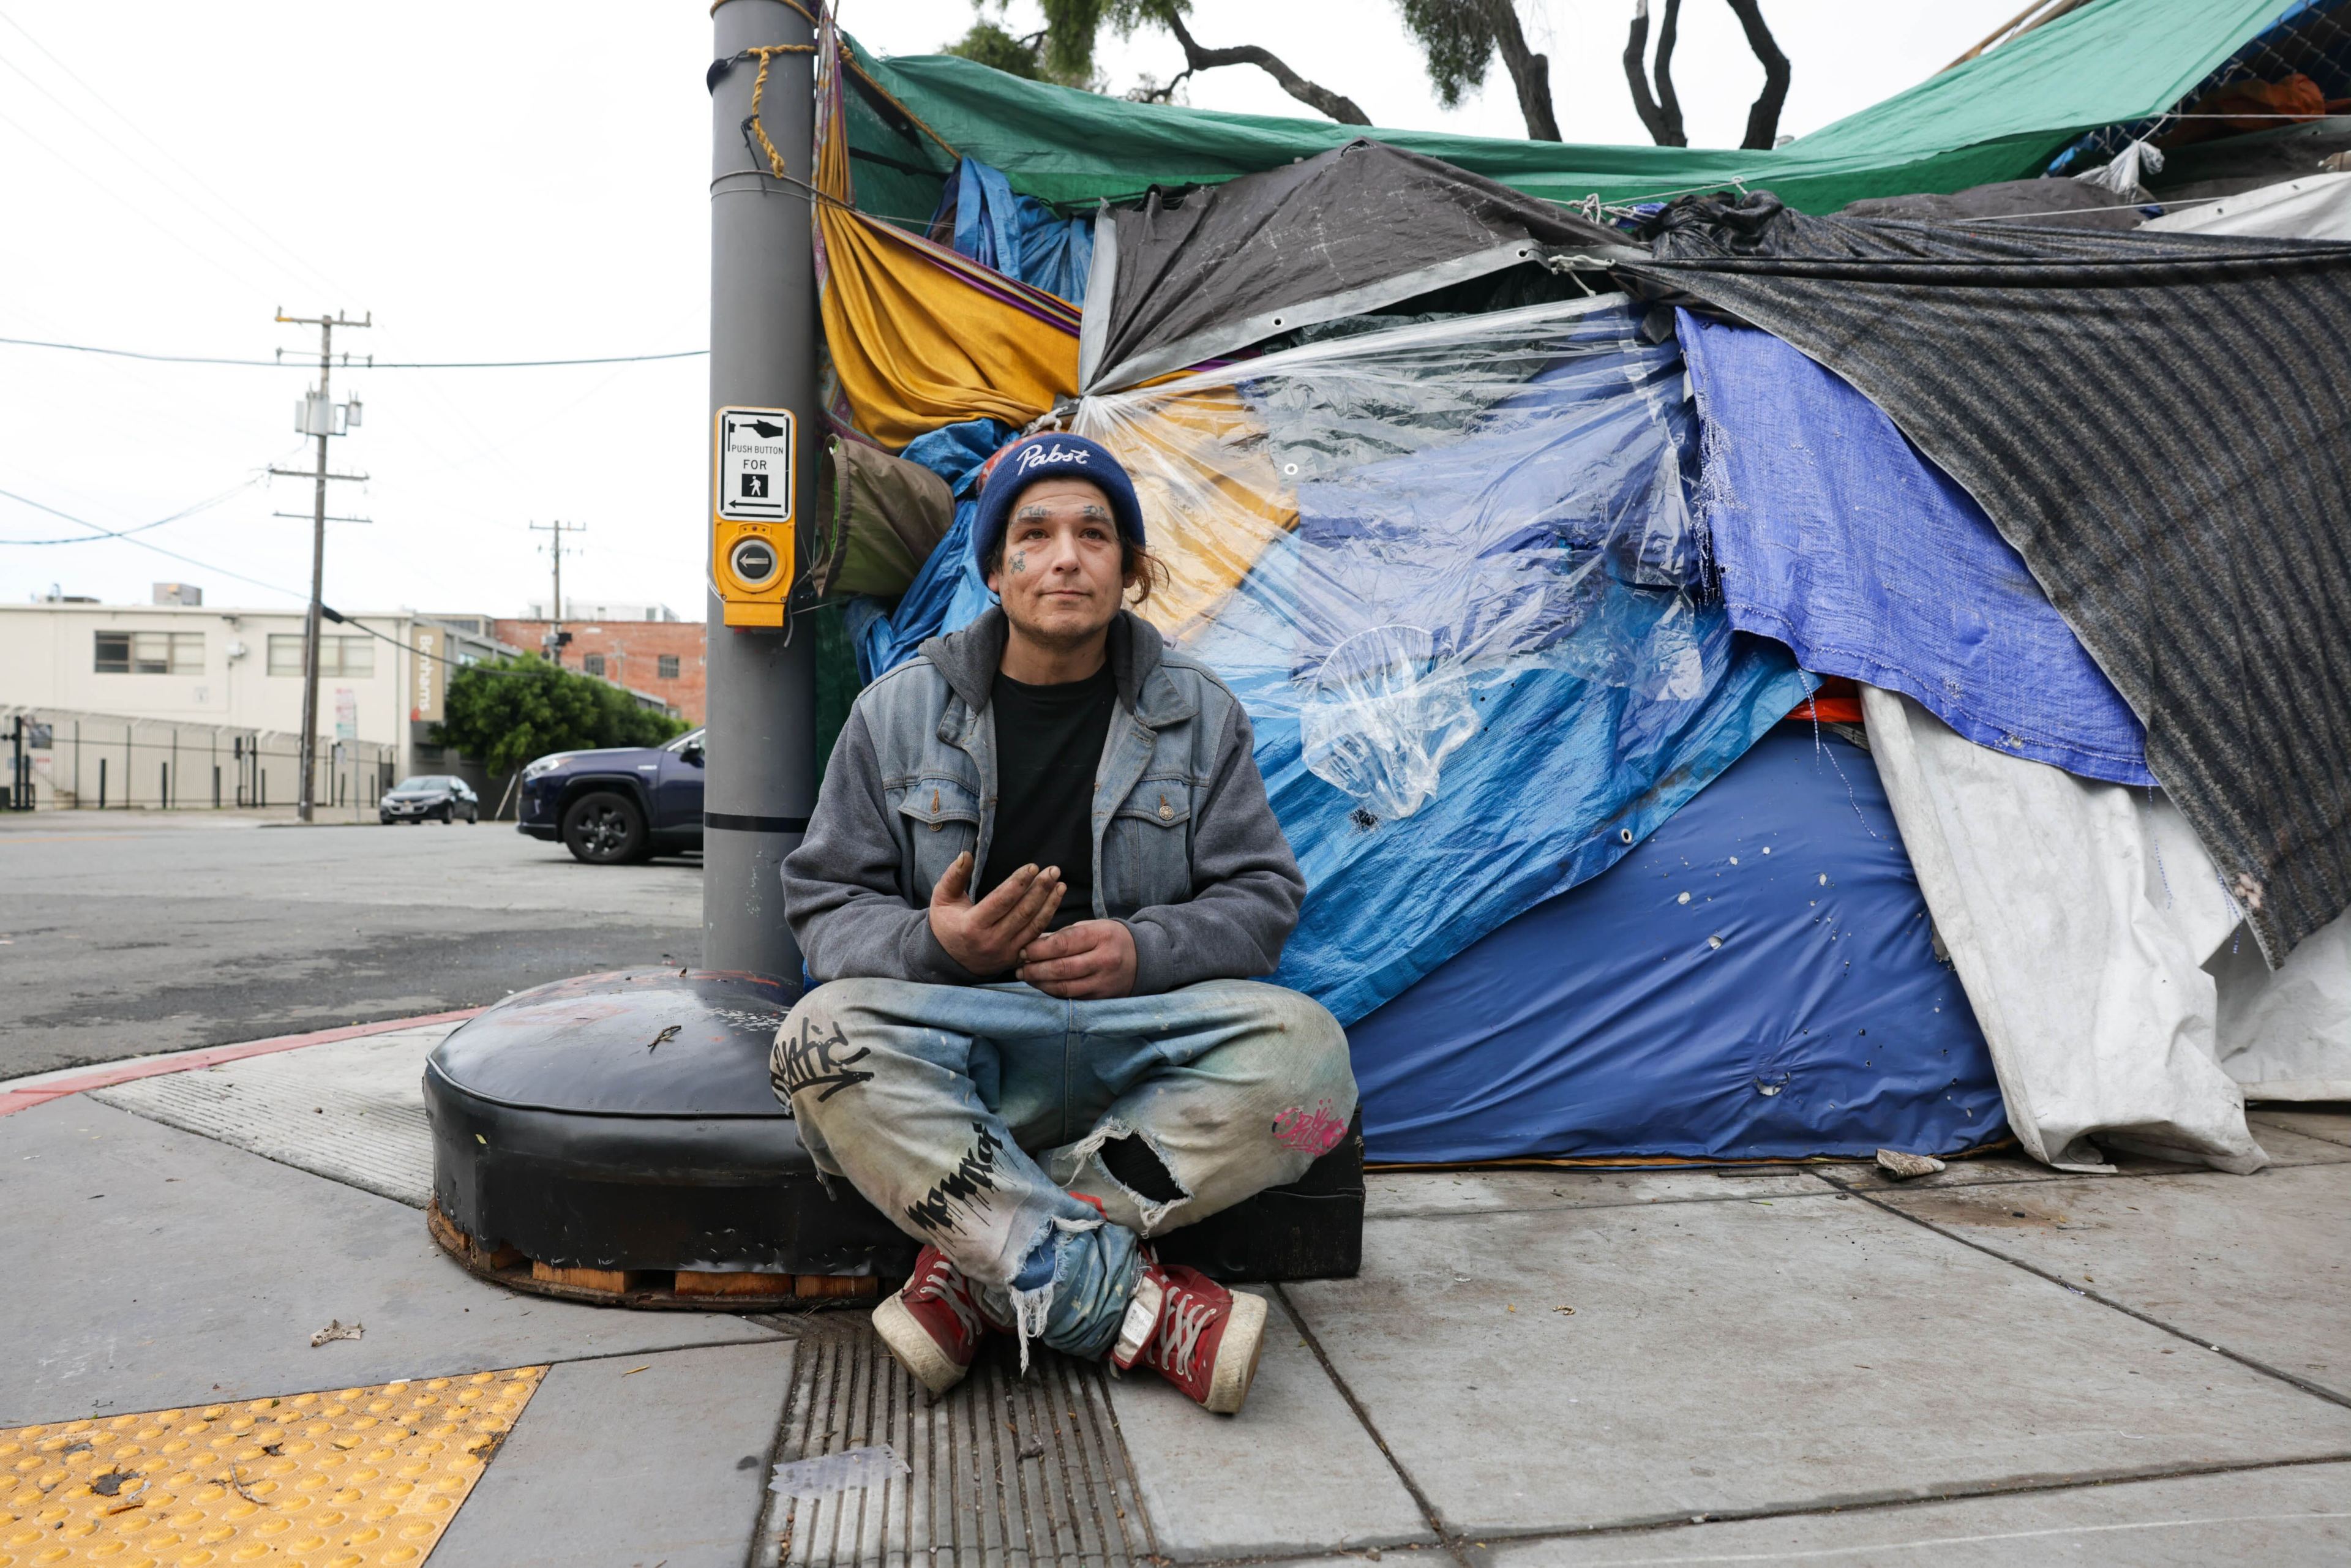 A man sits on a sidewalk near a makeshift tent, suggesting urban homelessness.